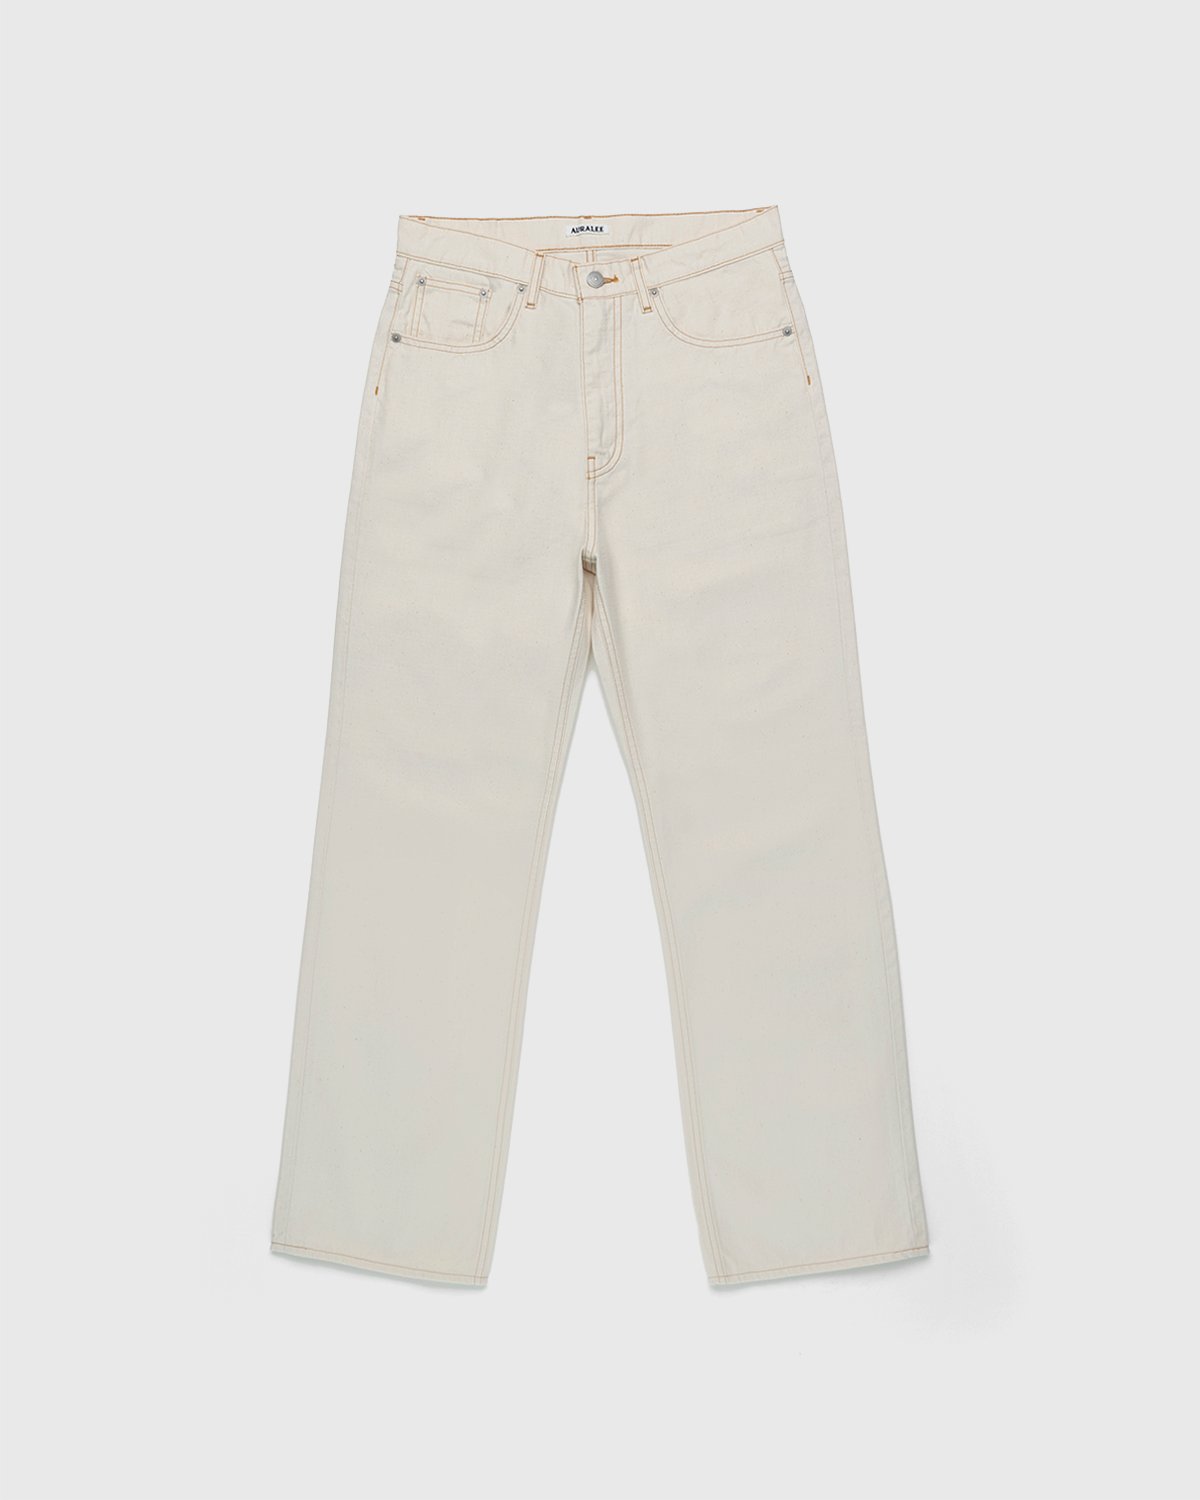 Auralee - Organic Undyed Cotton Pants Natural - Clothing - Beige - Image 1